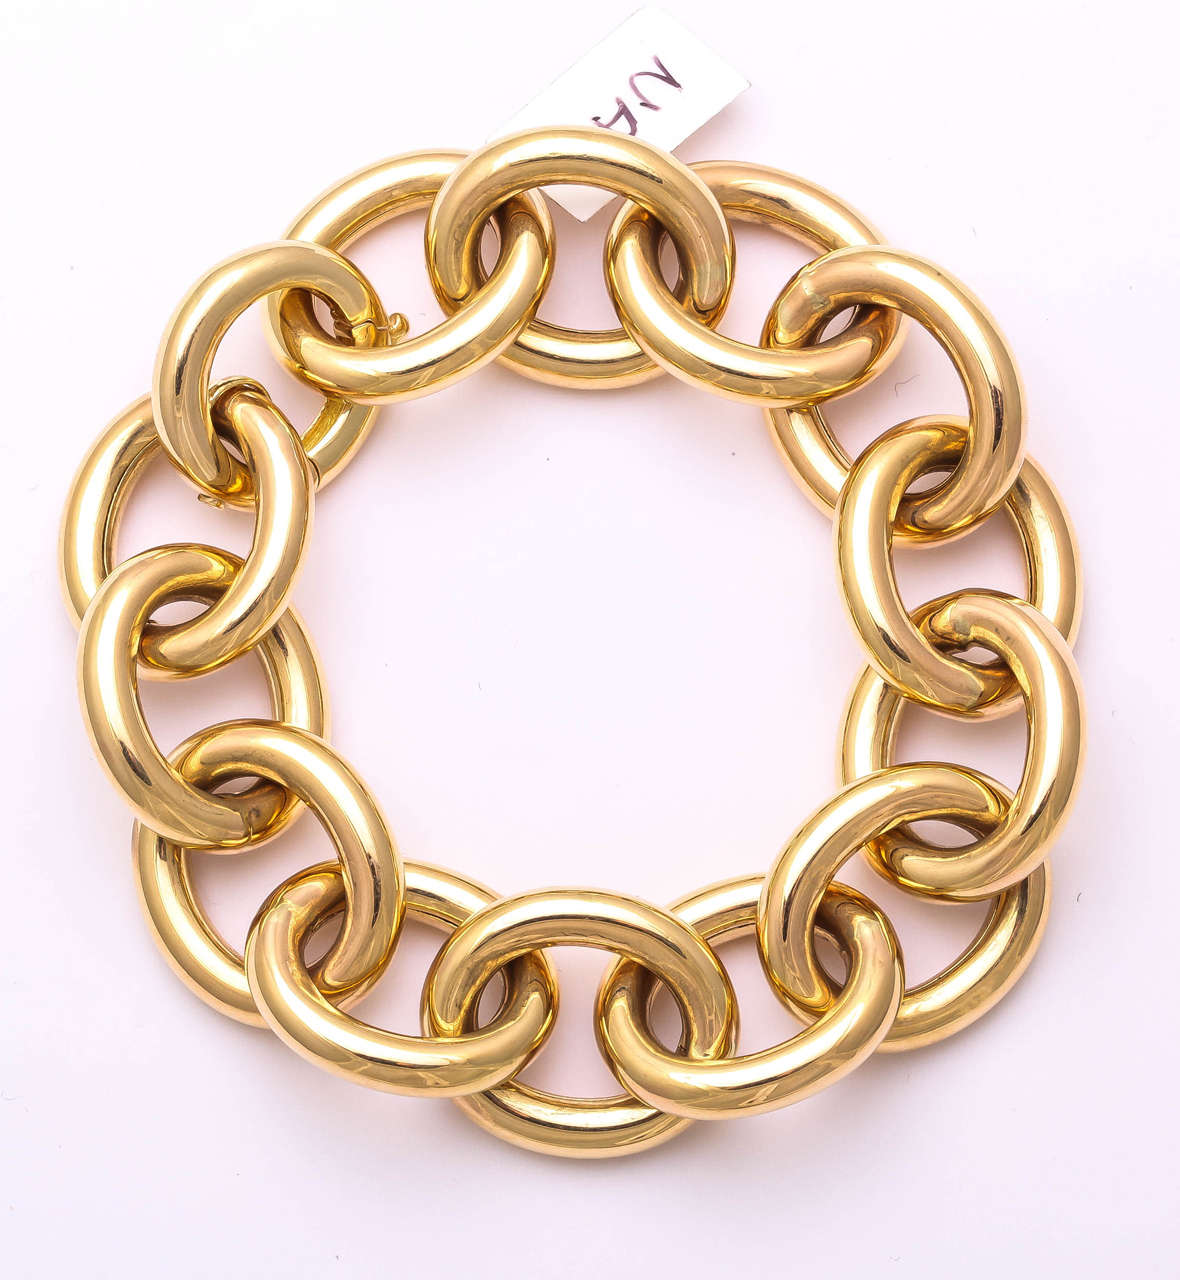 18K Gold link bracelet weighing 39.80 grams.